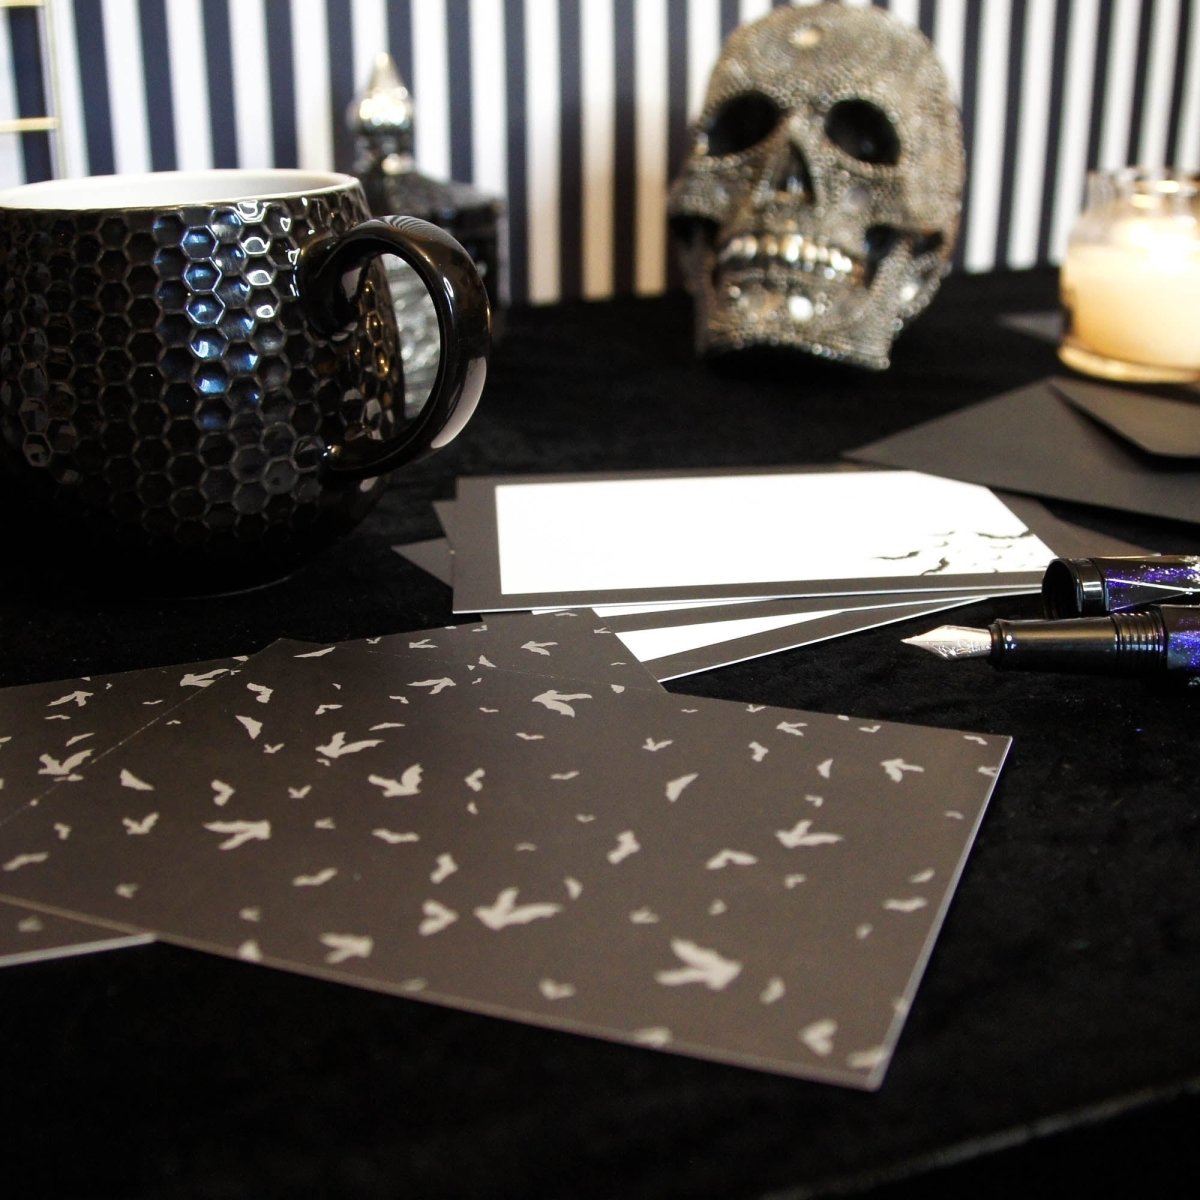 Simple Bat Notecard Writing Set | Grim & Proper - The Gothic Stationery Company - Writing Set